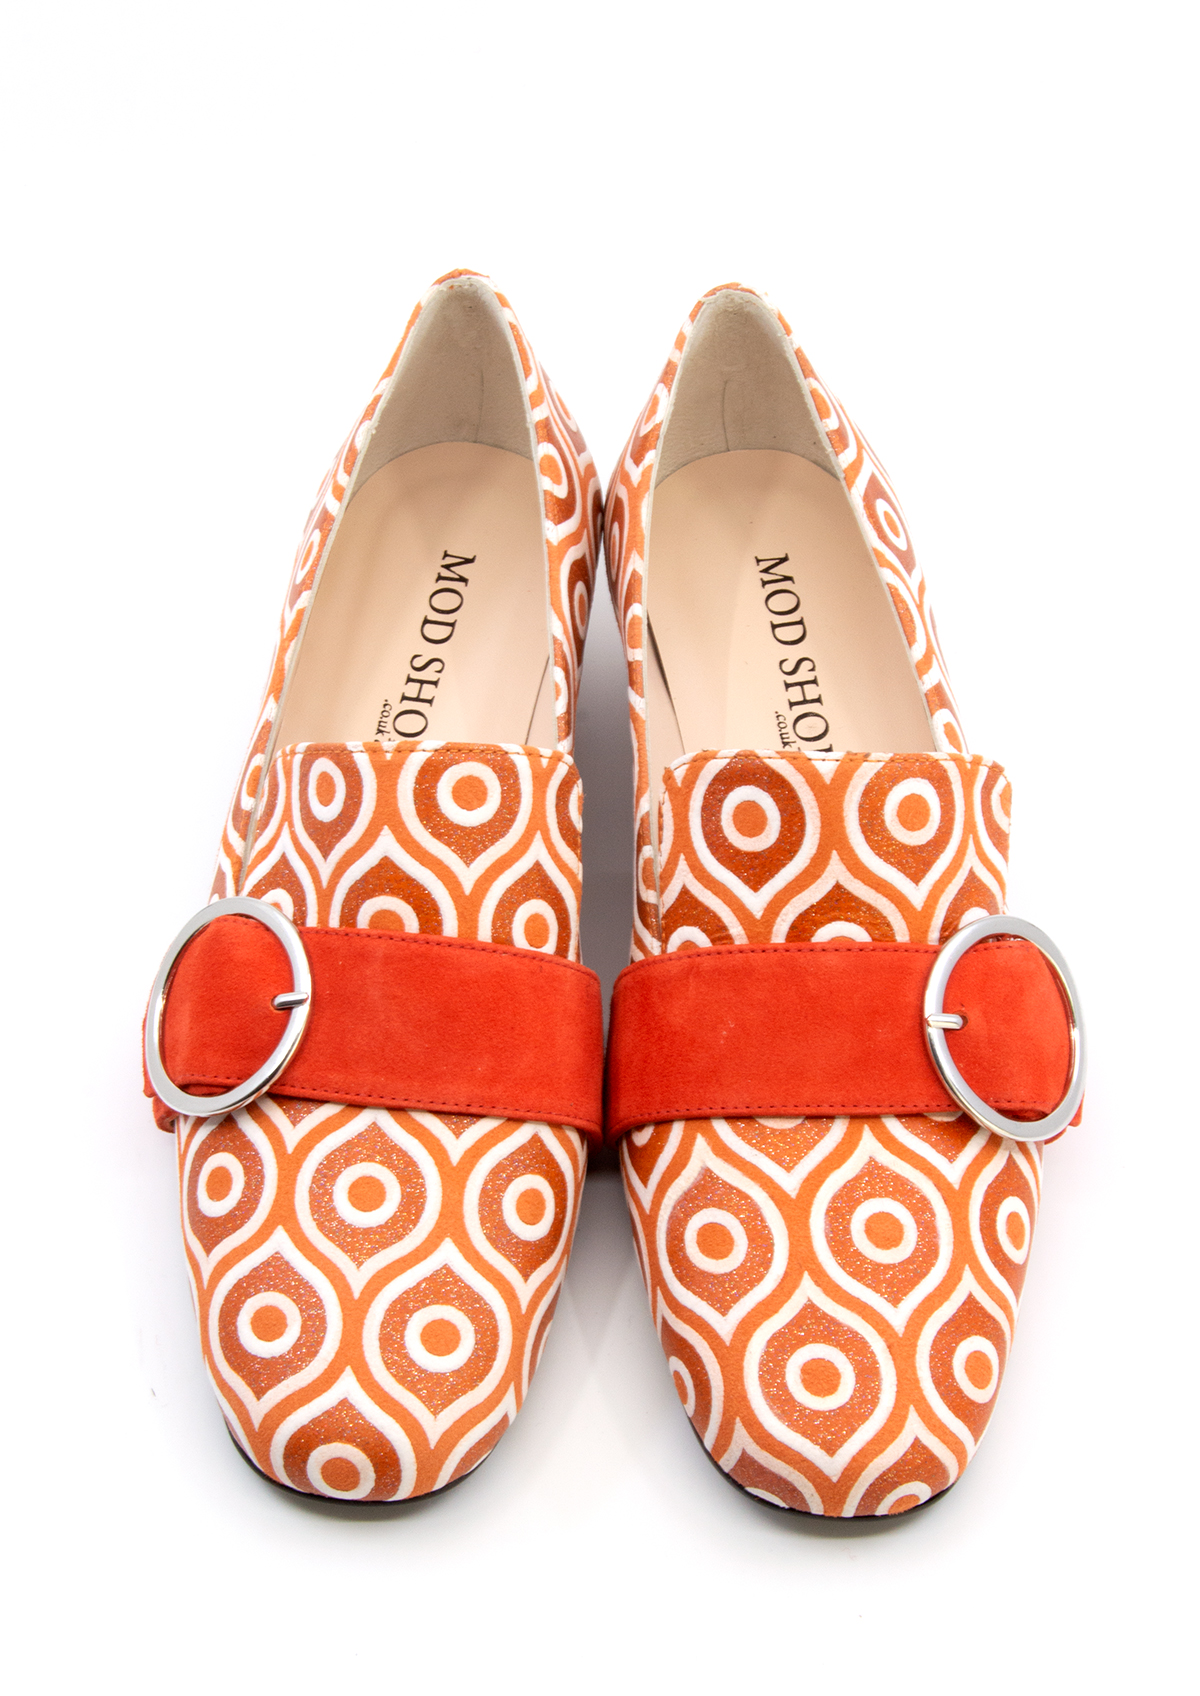 orange ladies shoes uk